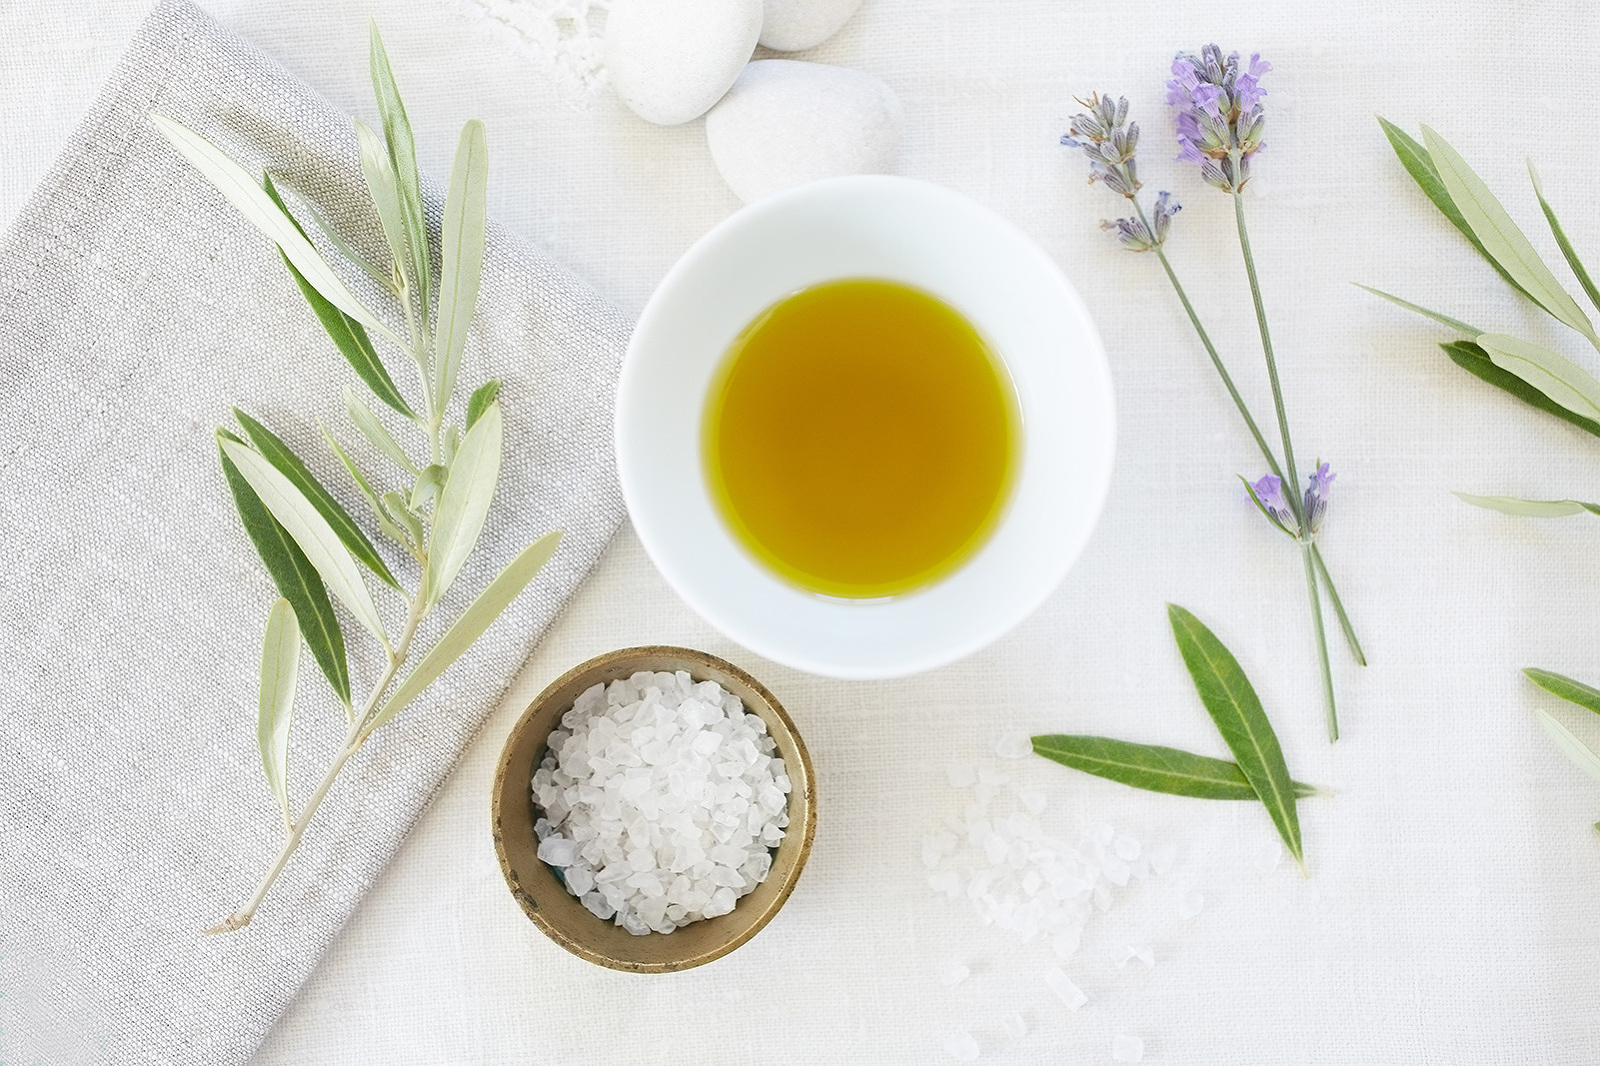 Assortment of massage herbs + oils  | Dovis Bird Agency Photography